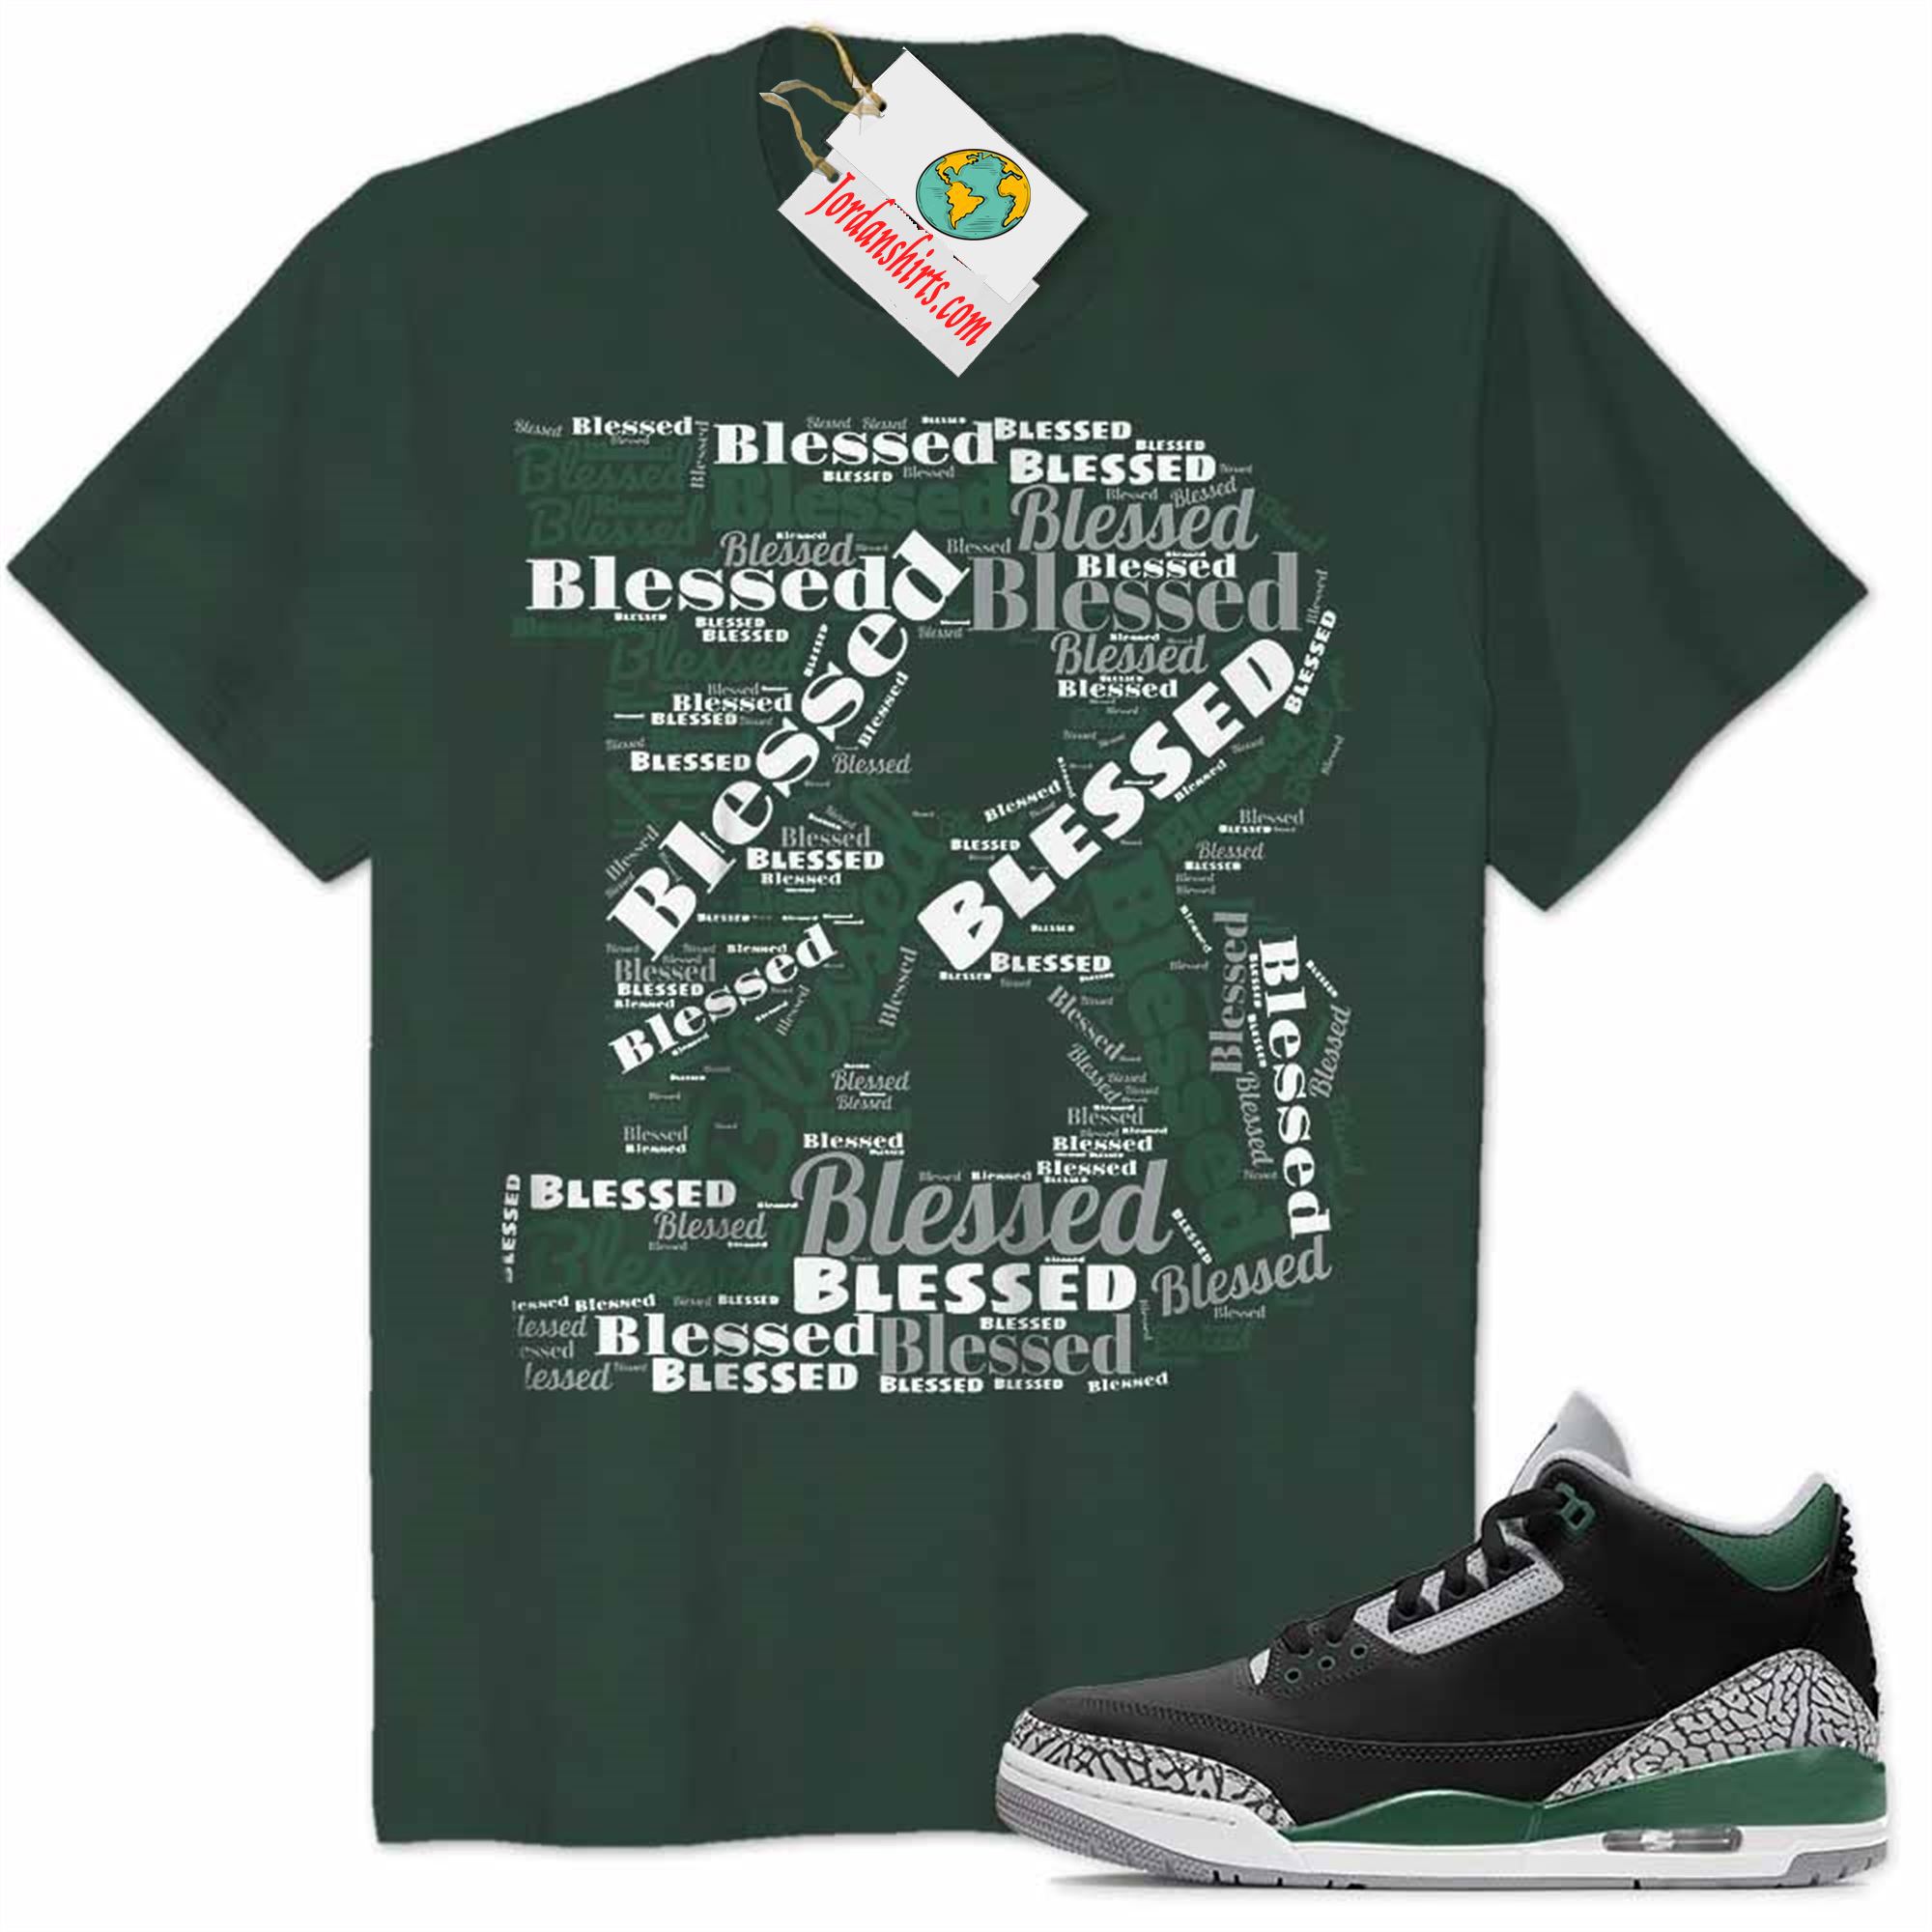 Jordan 3 Shirt, B Blessed Blessing Forest Air Jordan 3 Pine Green 3s Size Up To 5xl